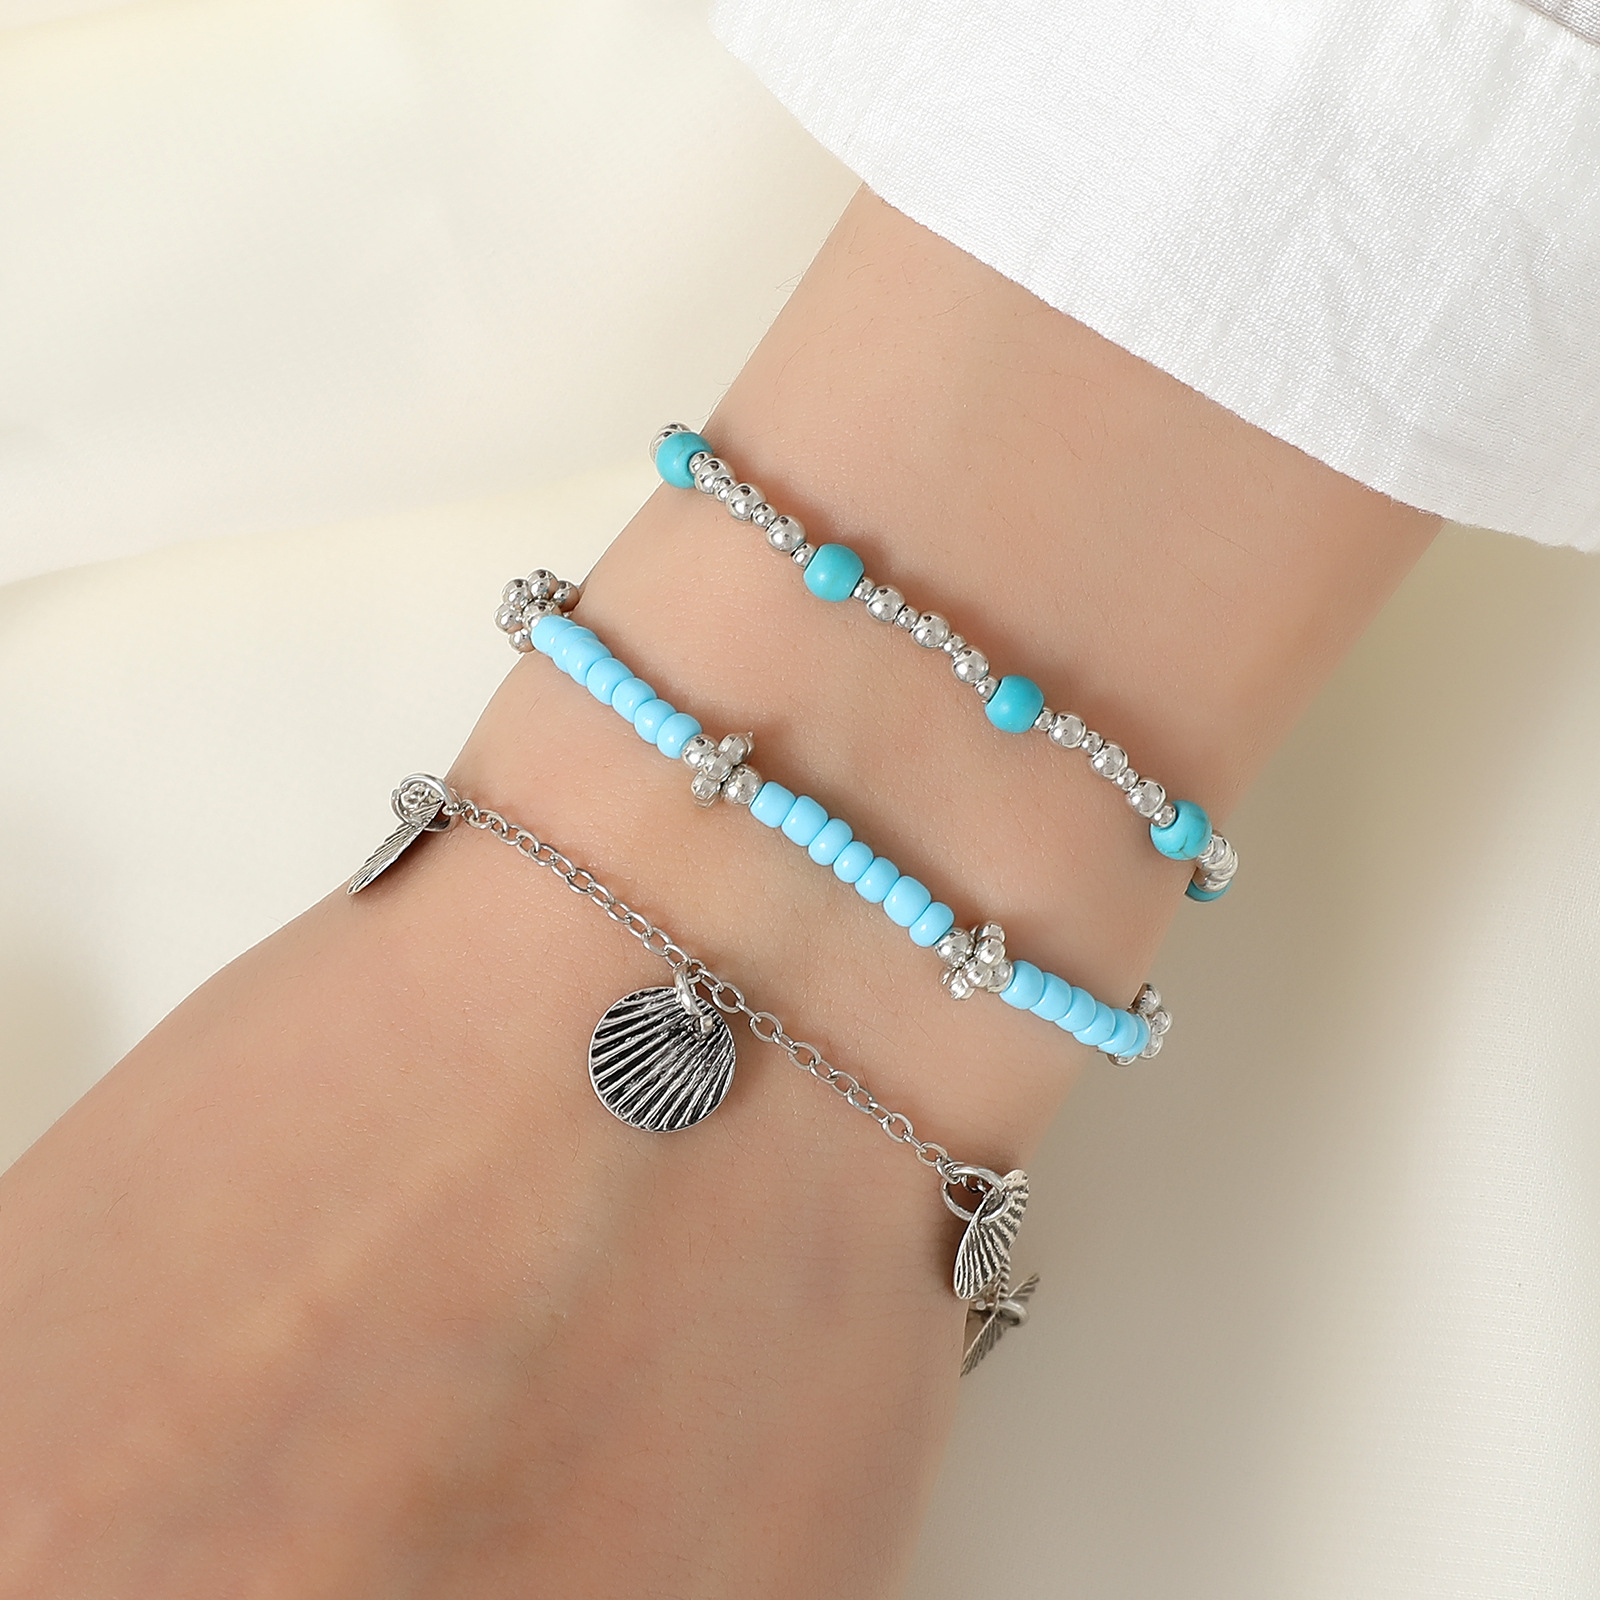 1:Light blue - Bracelet